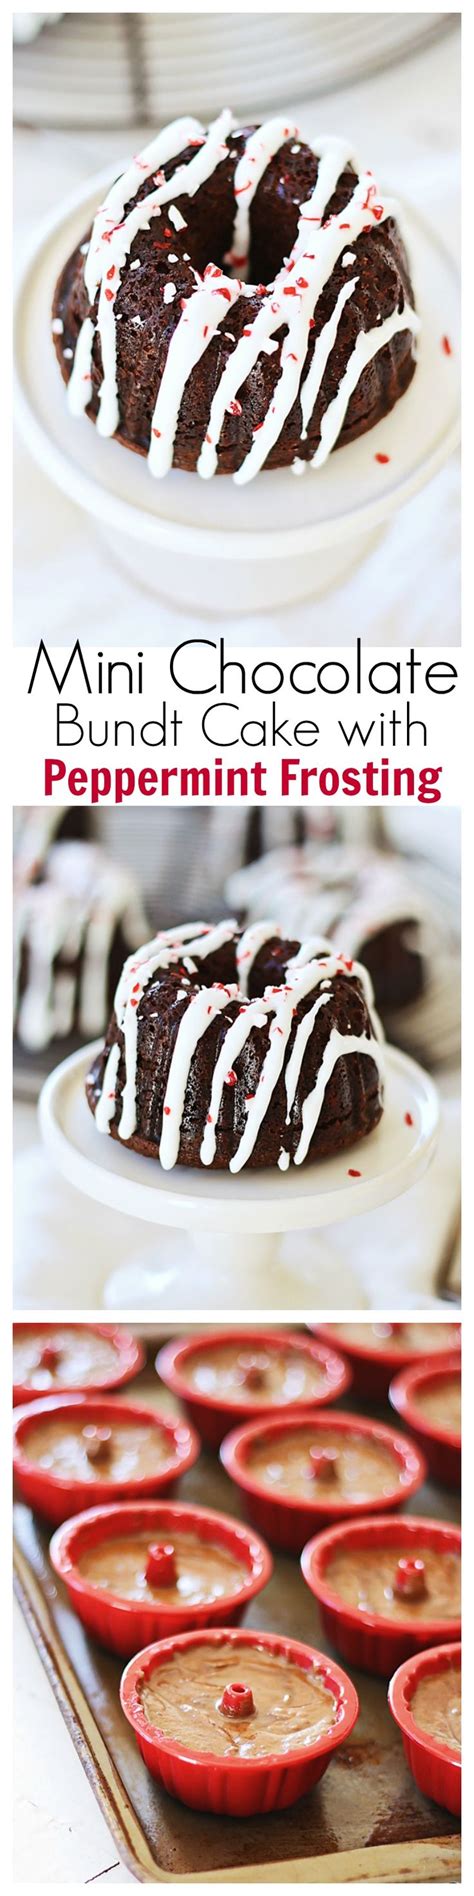 6 bundt cake recipes you'll fall for immediately. Christmas Mini Bundt Cake Recipes - Chocolate Peppermint Mini Bundt Cakes - My Baking Addiction ...